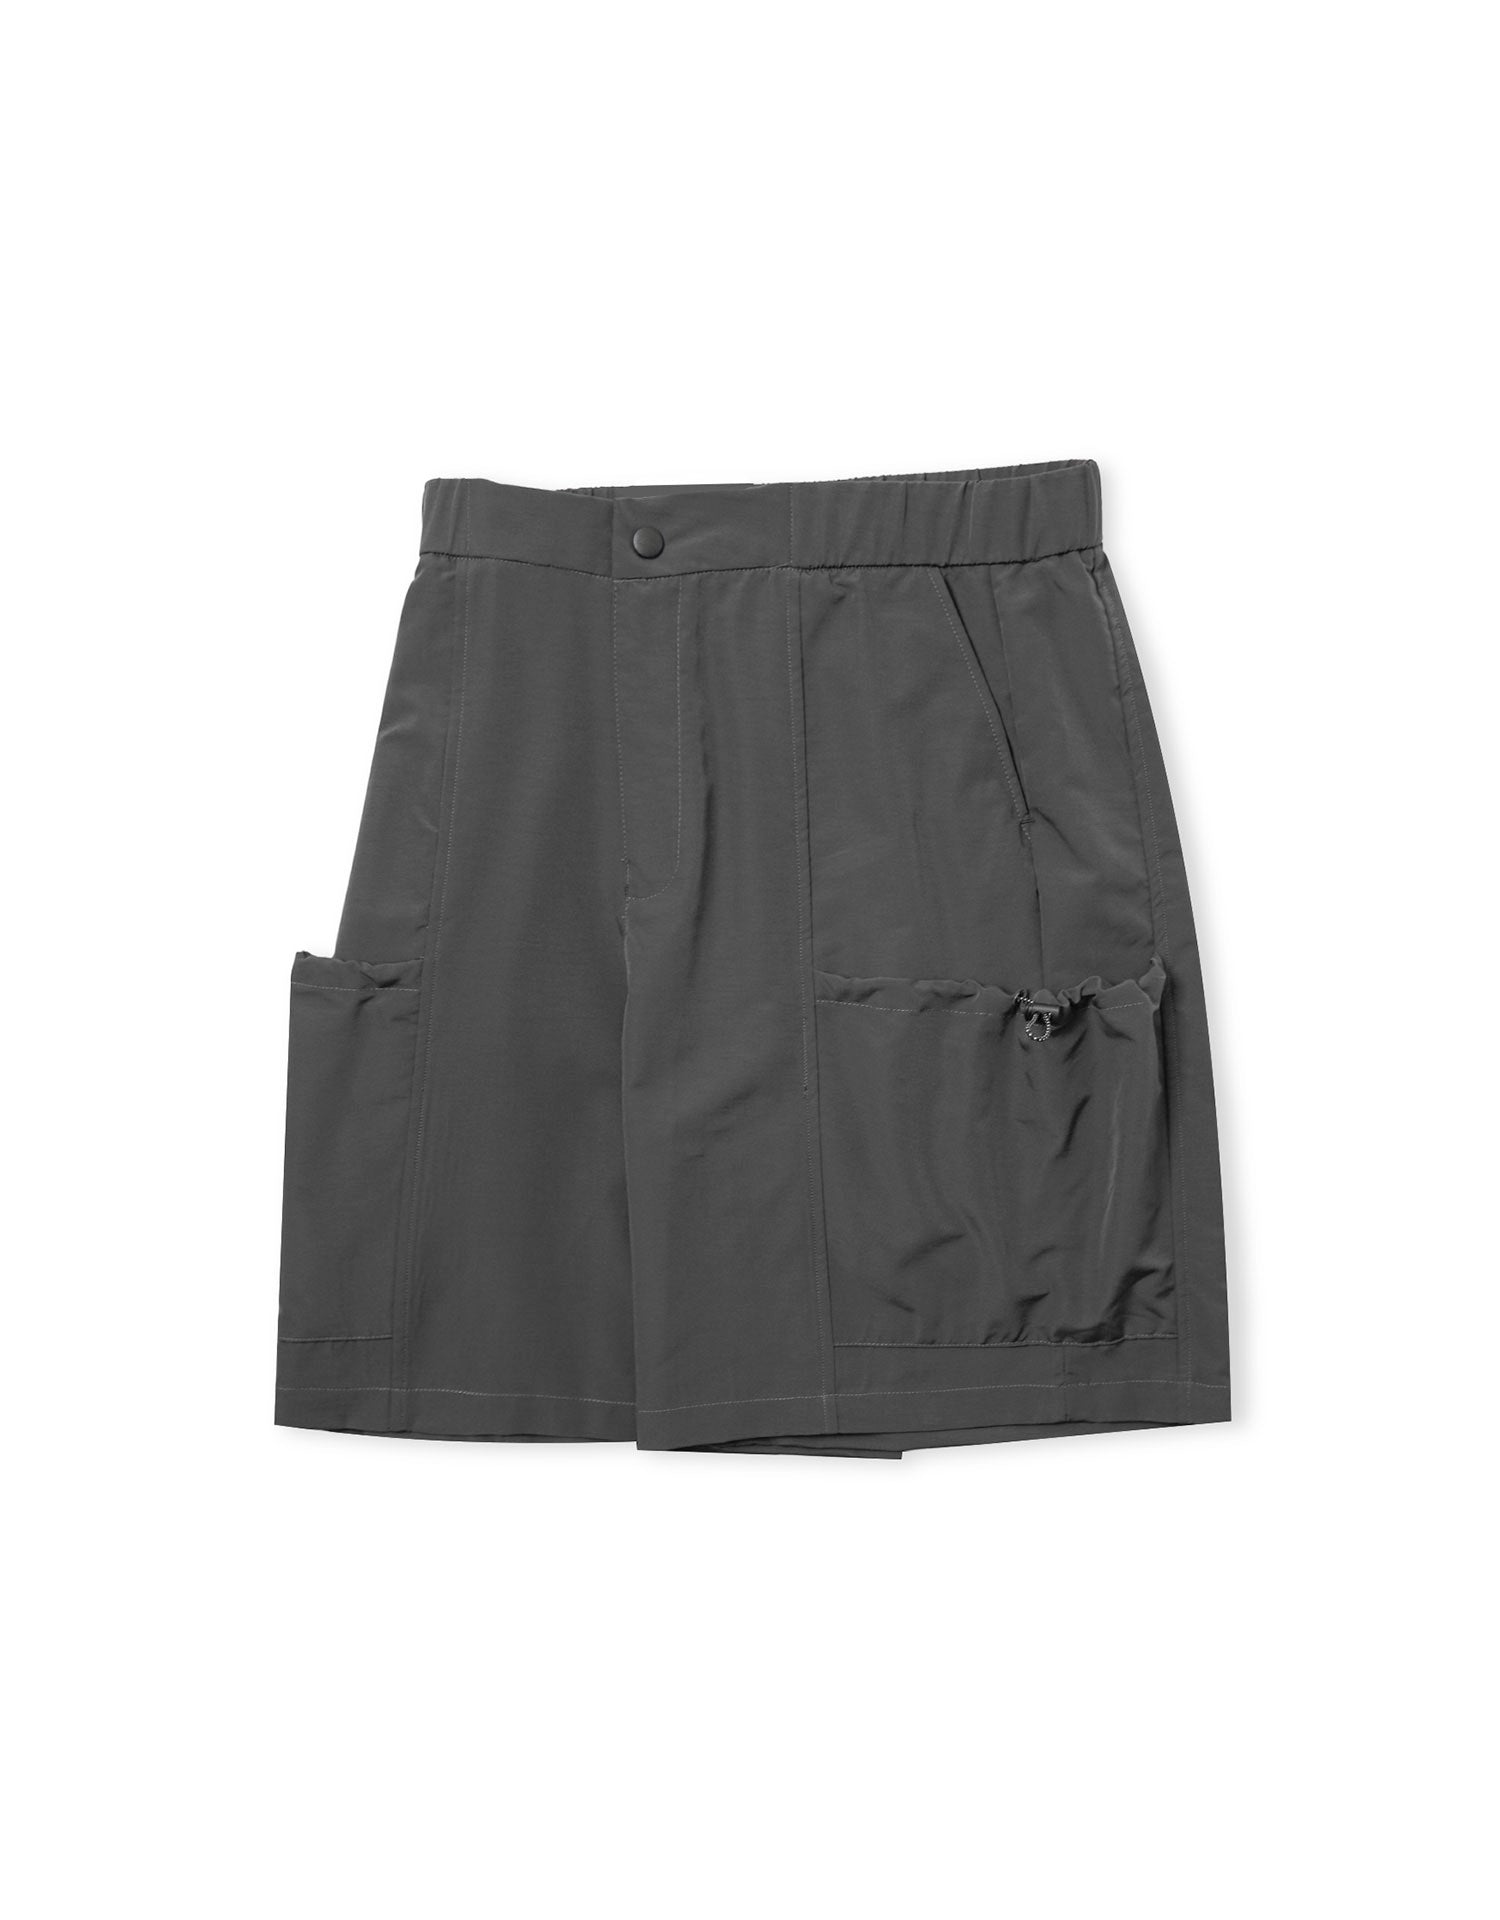 TopBasics Side Pockets Cargo Shorts